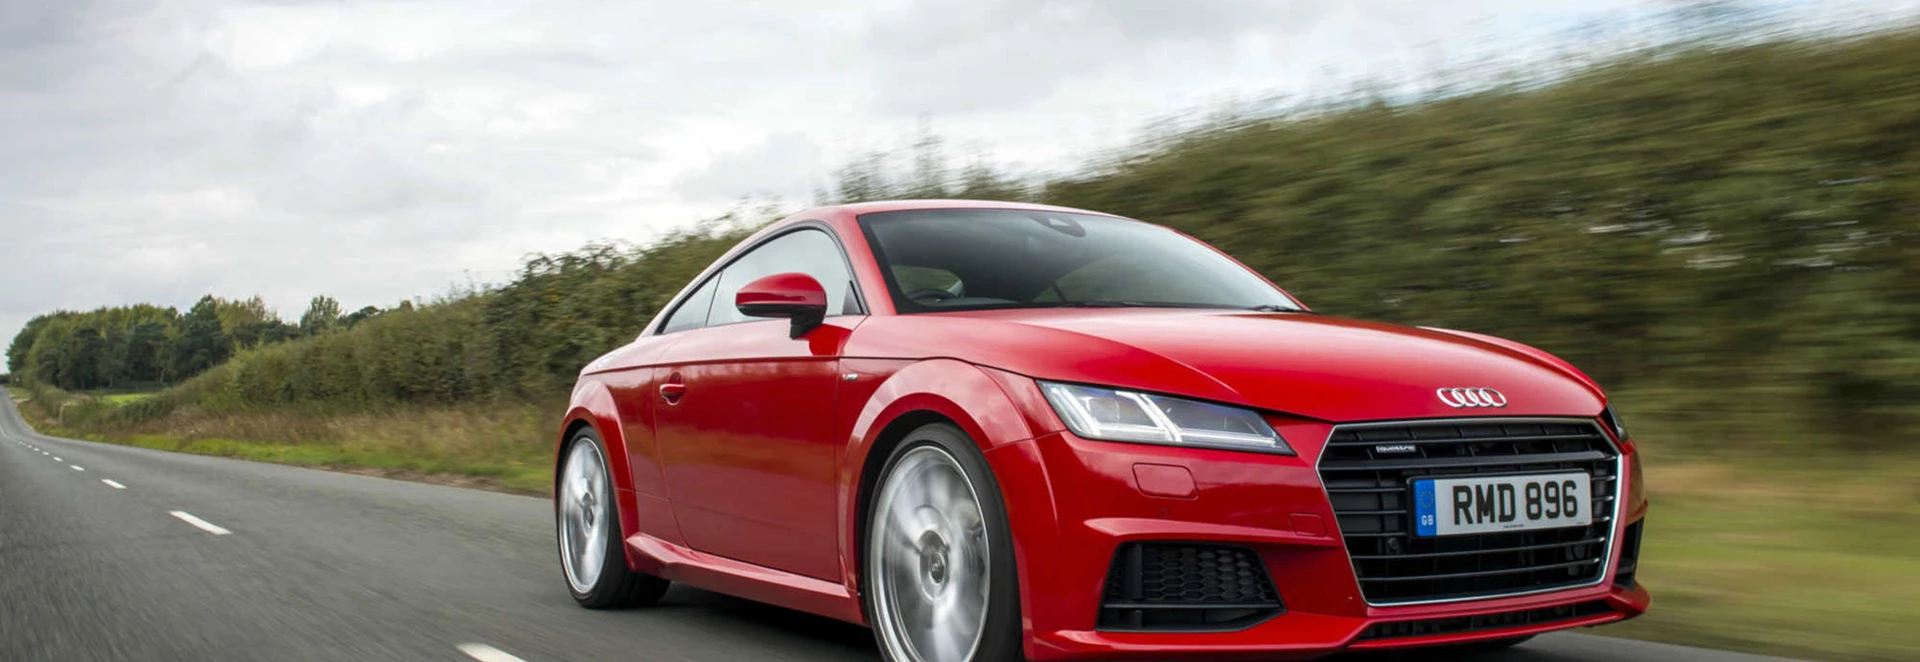 Audi TT coupe review 